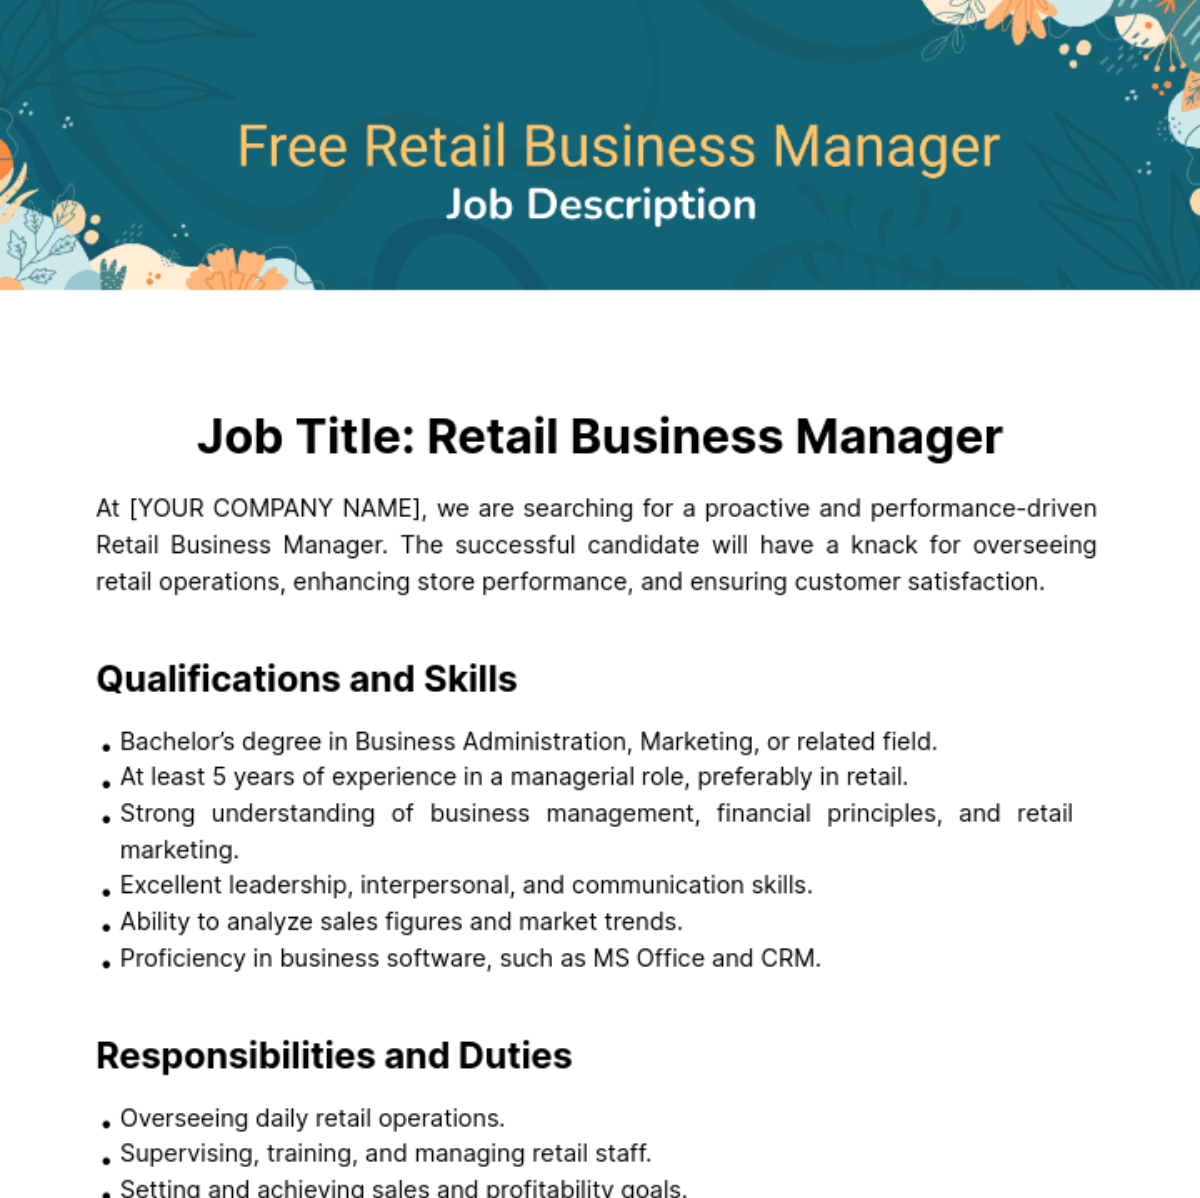 Free Retail Business Manager Job Description Template